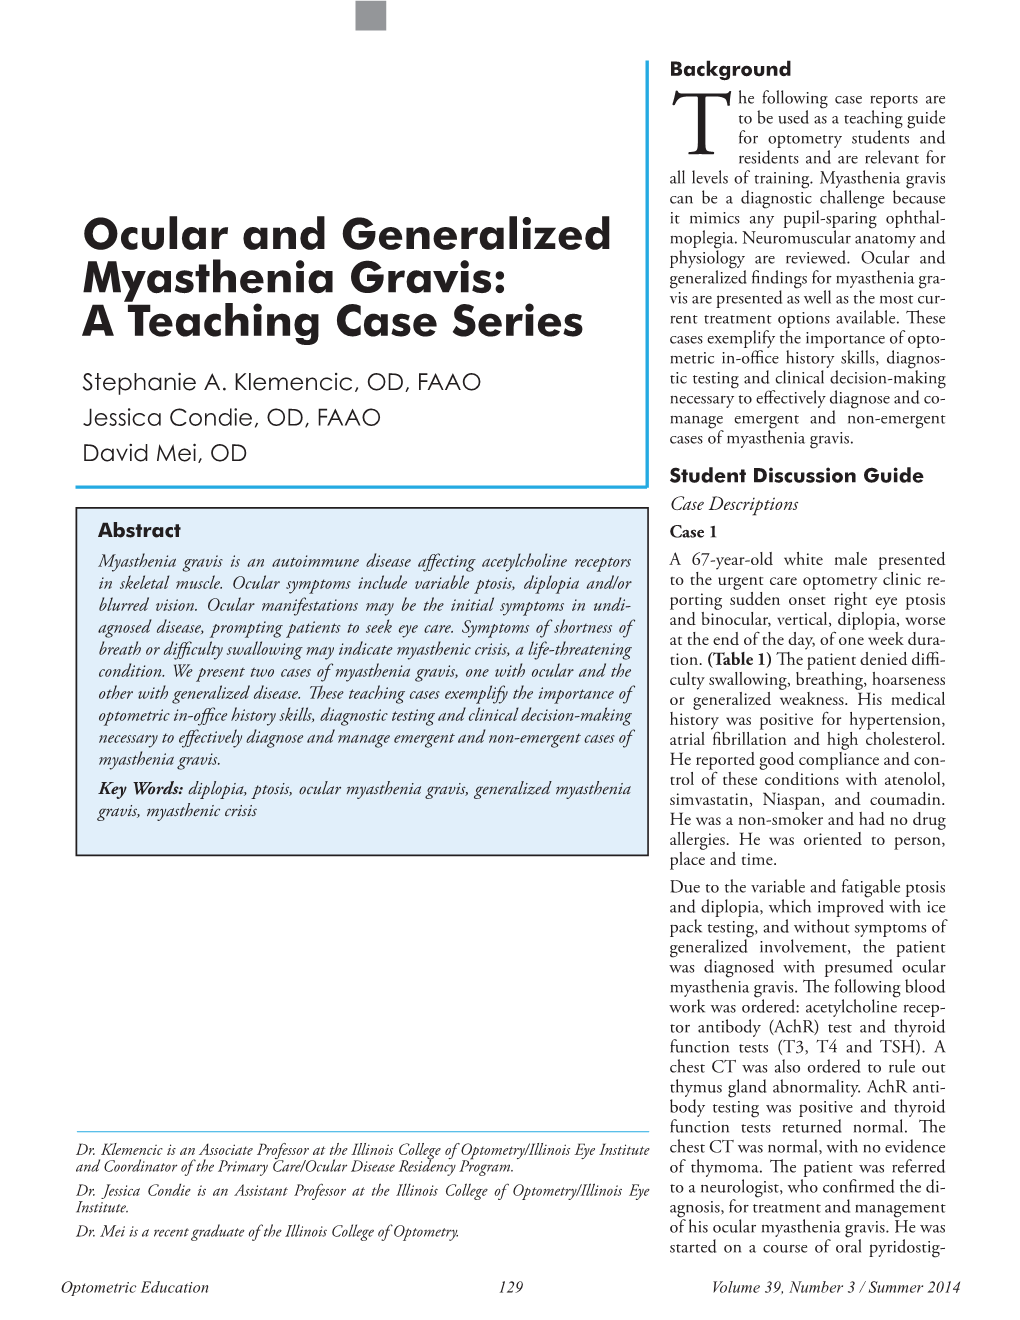 Ocular and Generalized Myasthenia Gravis: a Teaching Case Series